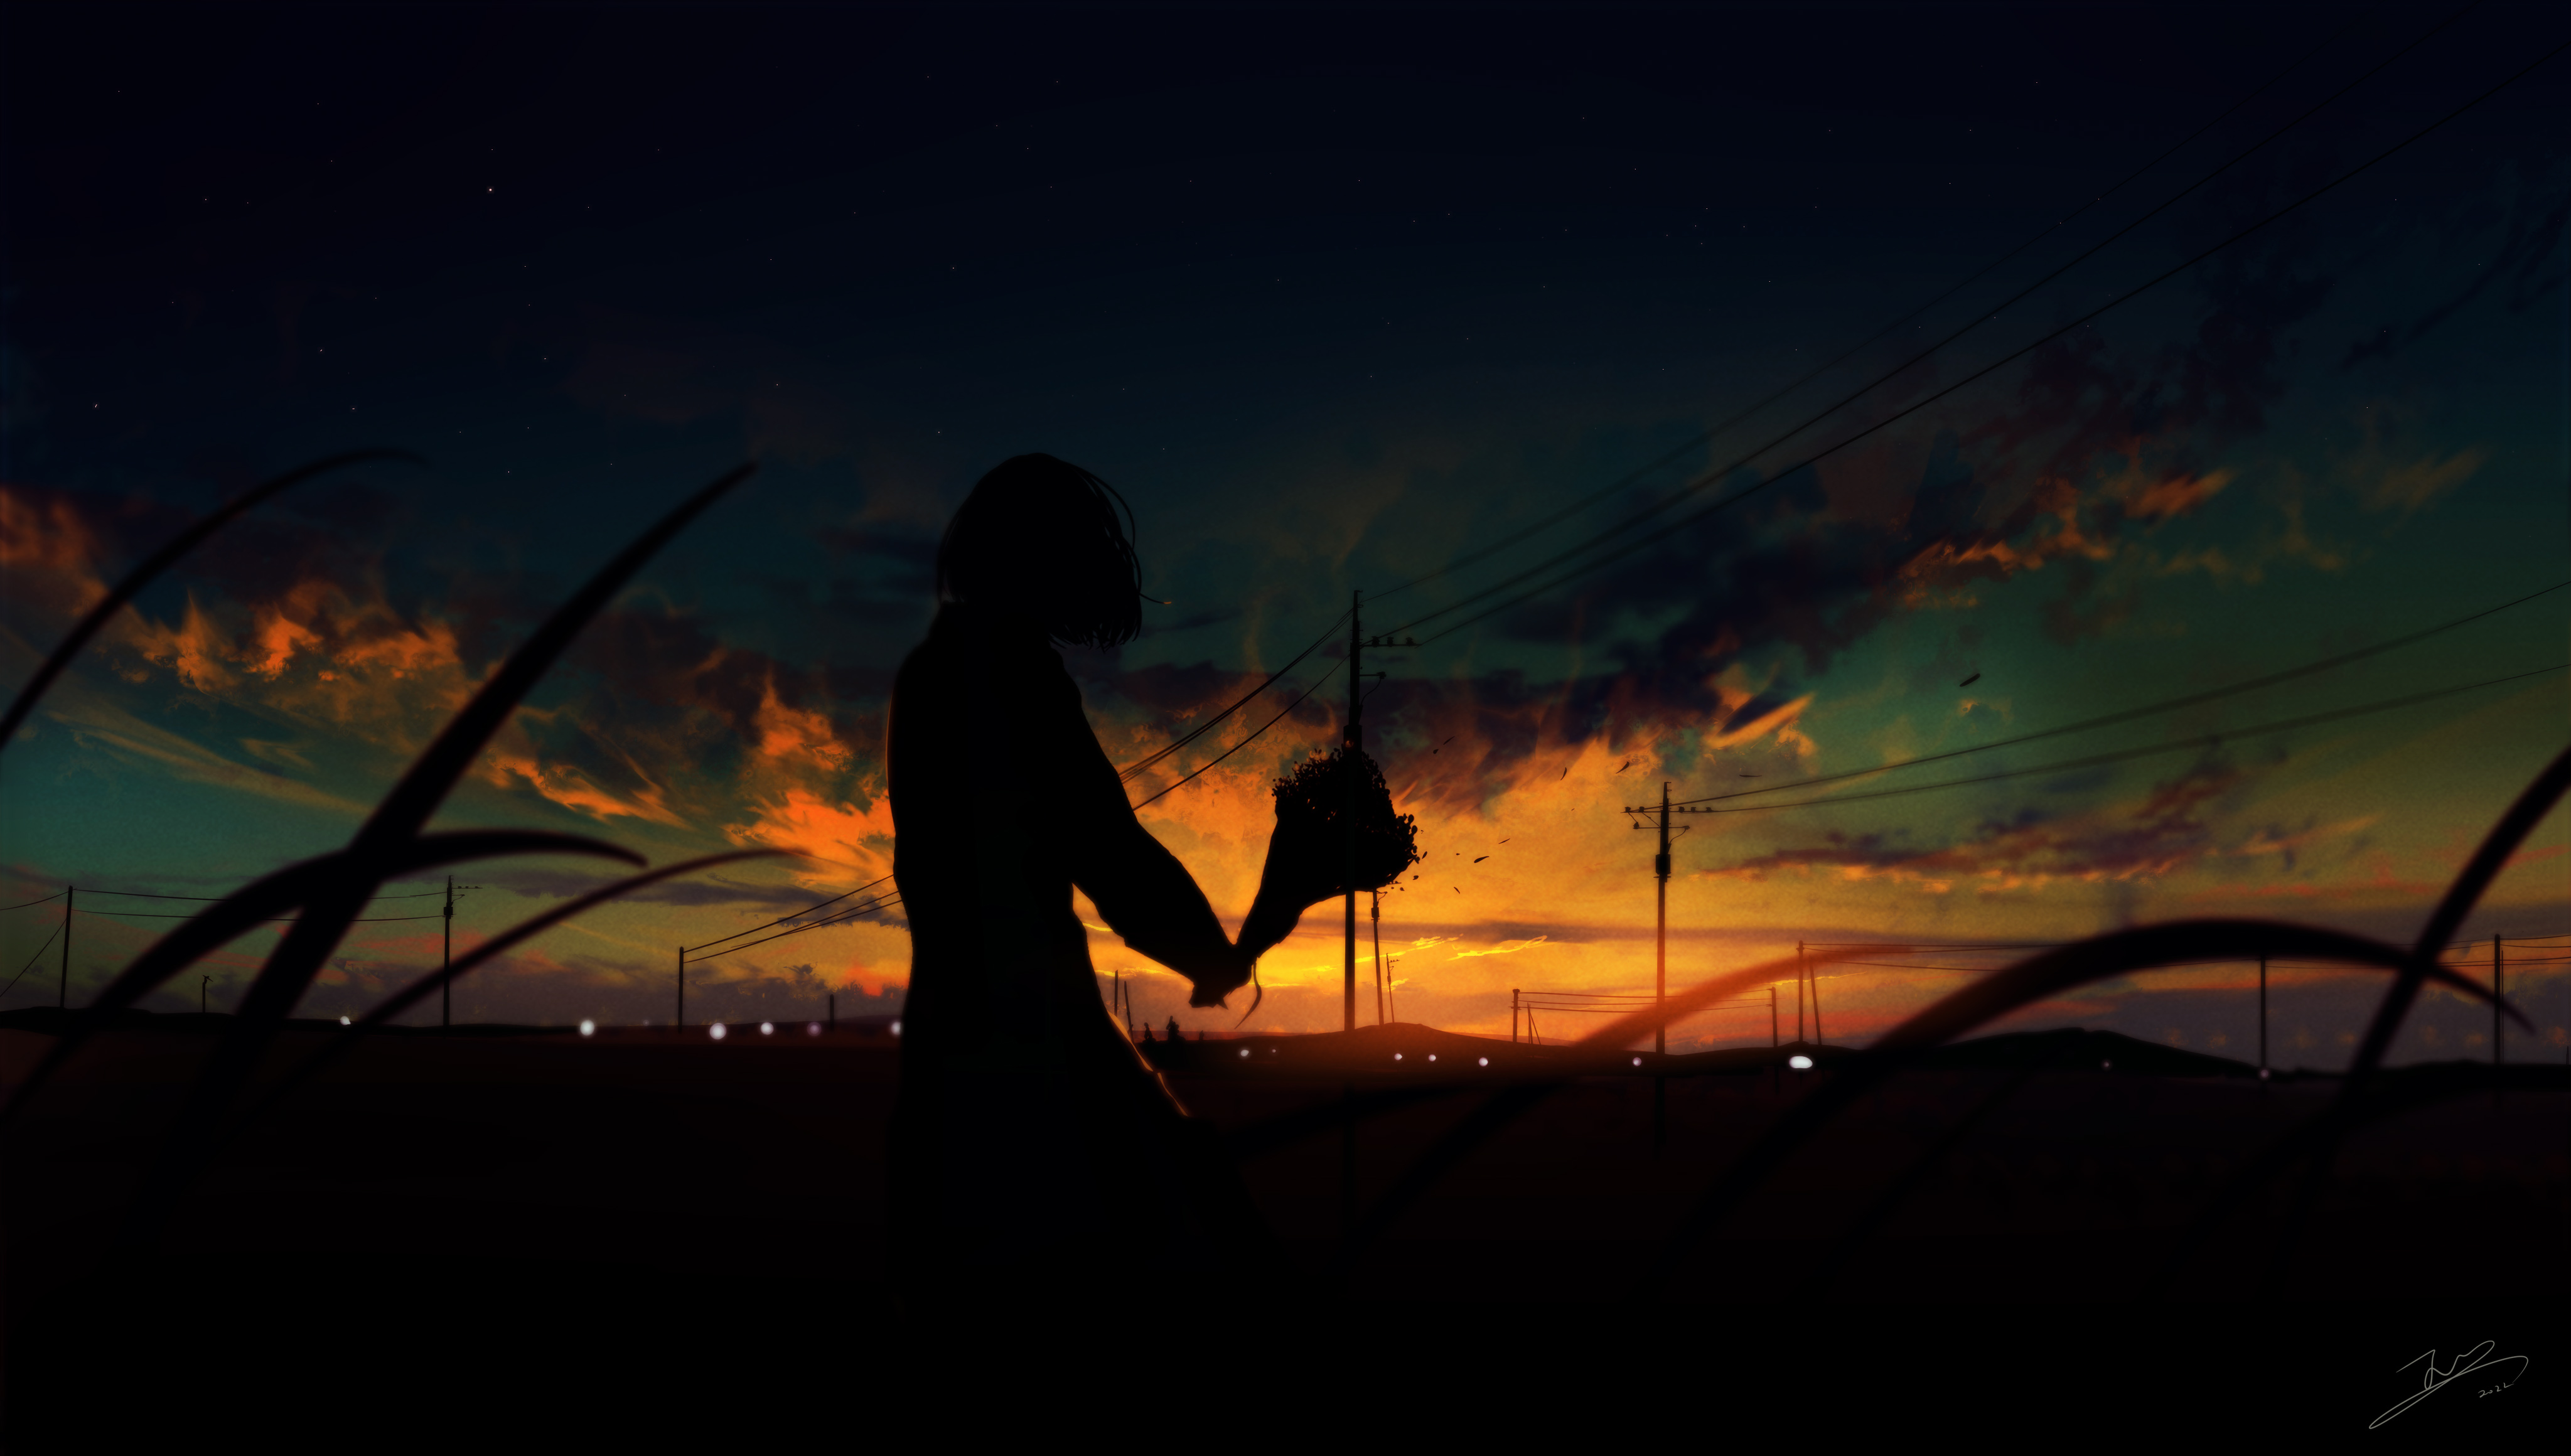 General 4096x2320 artwork landscape Pixiv dusk sunset fantasy girl silhouette bouquet